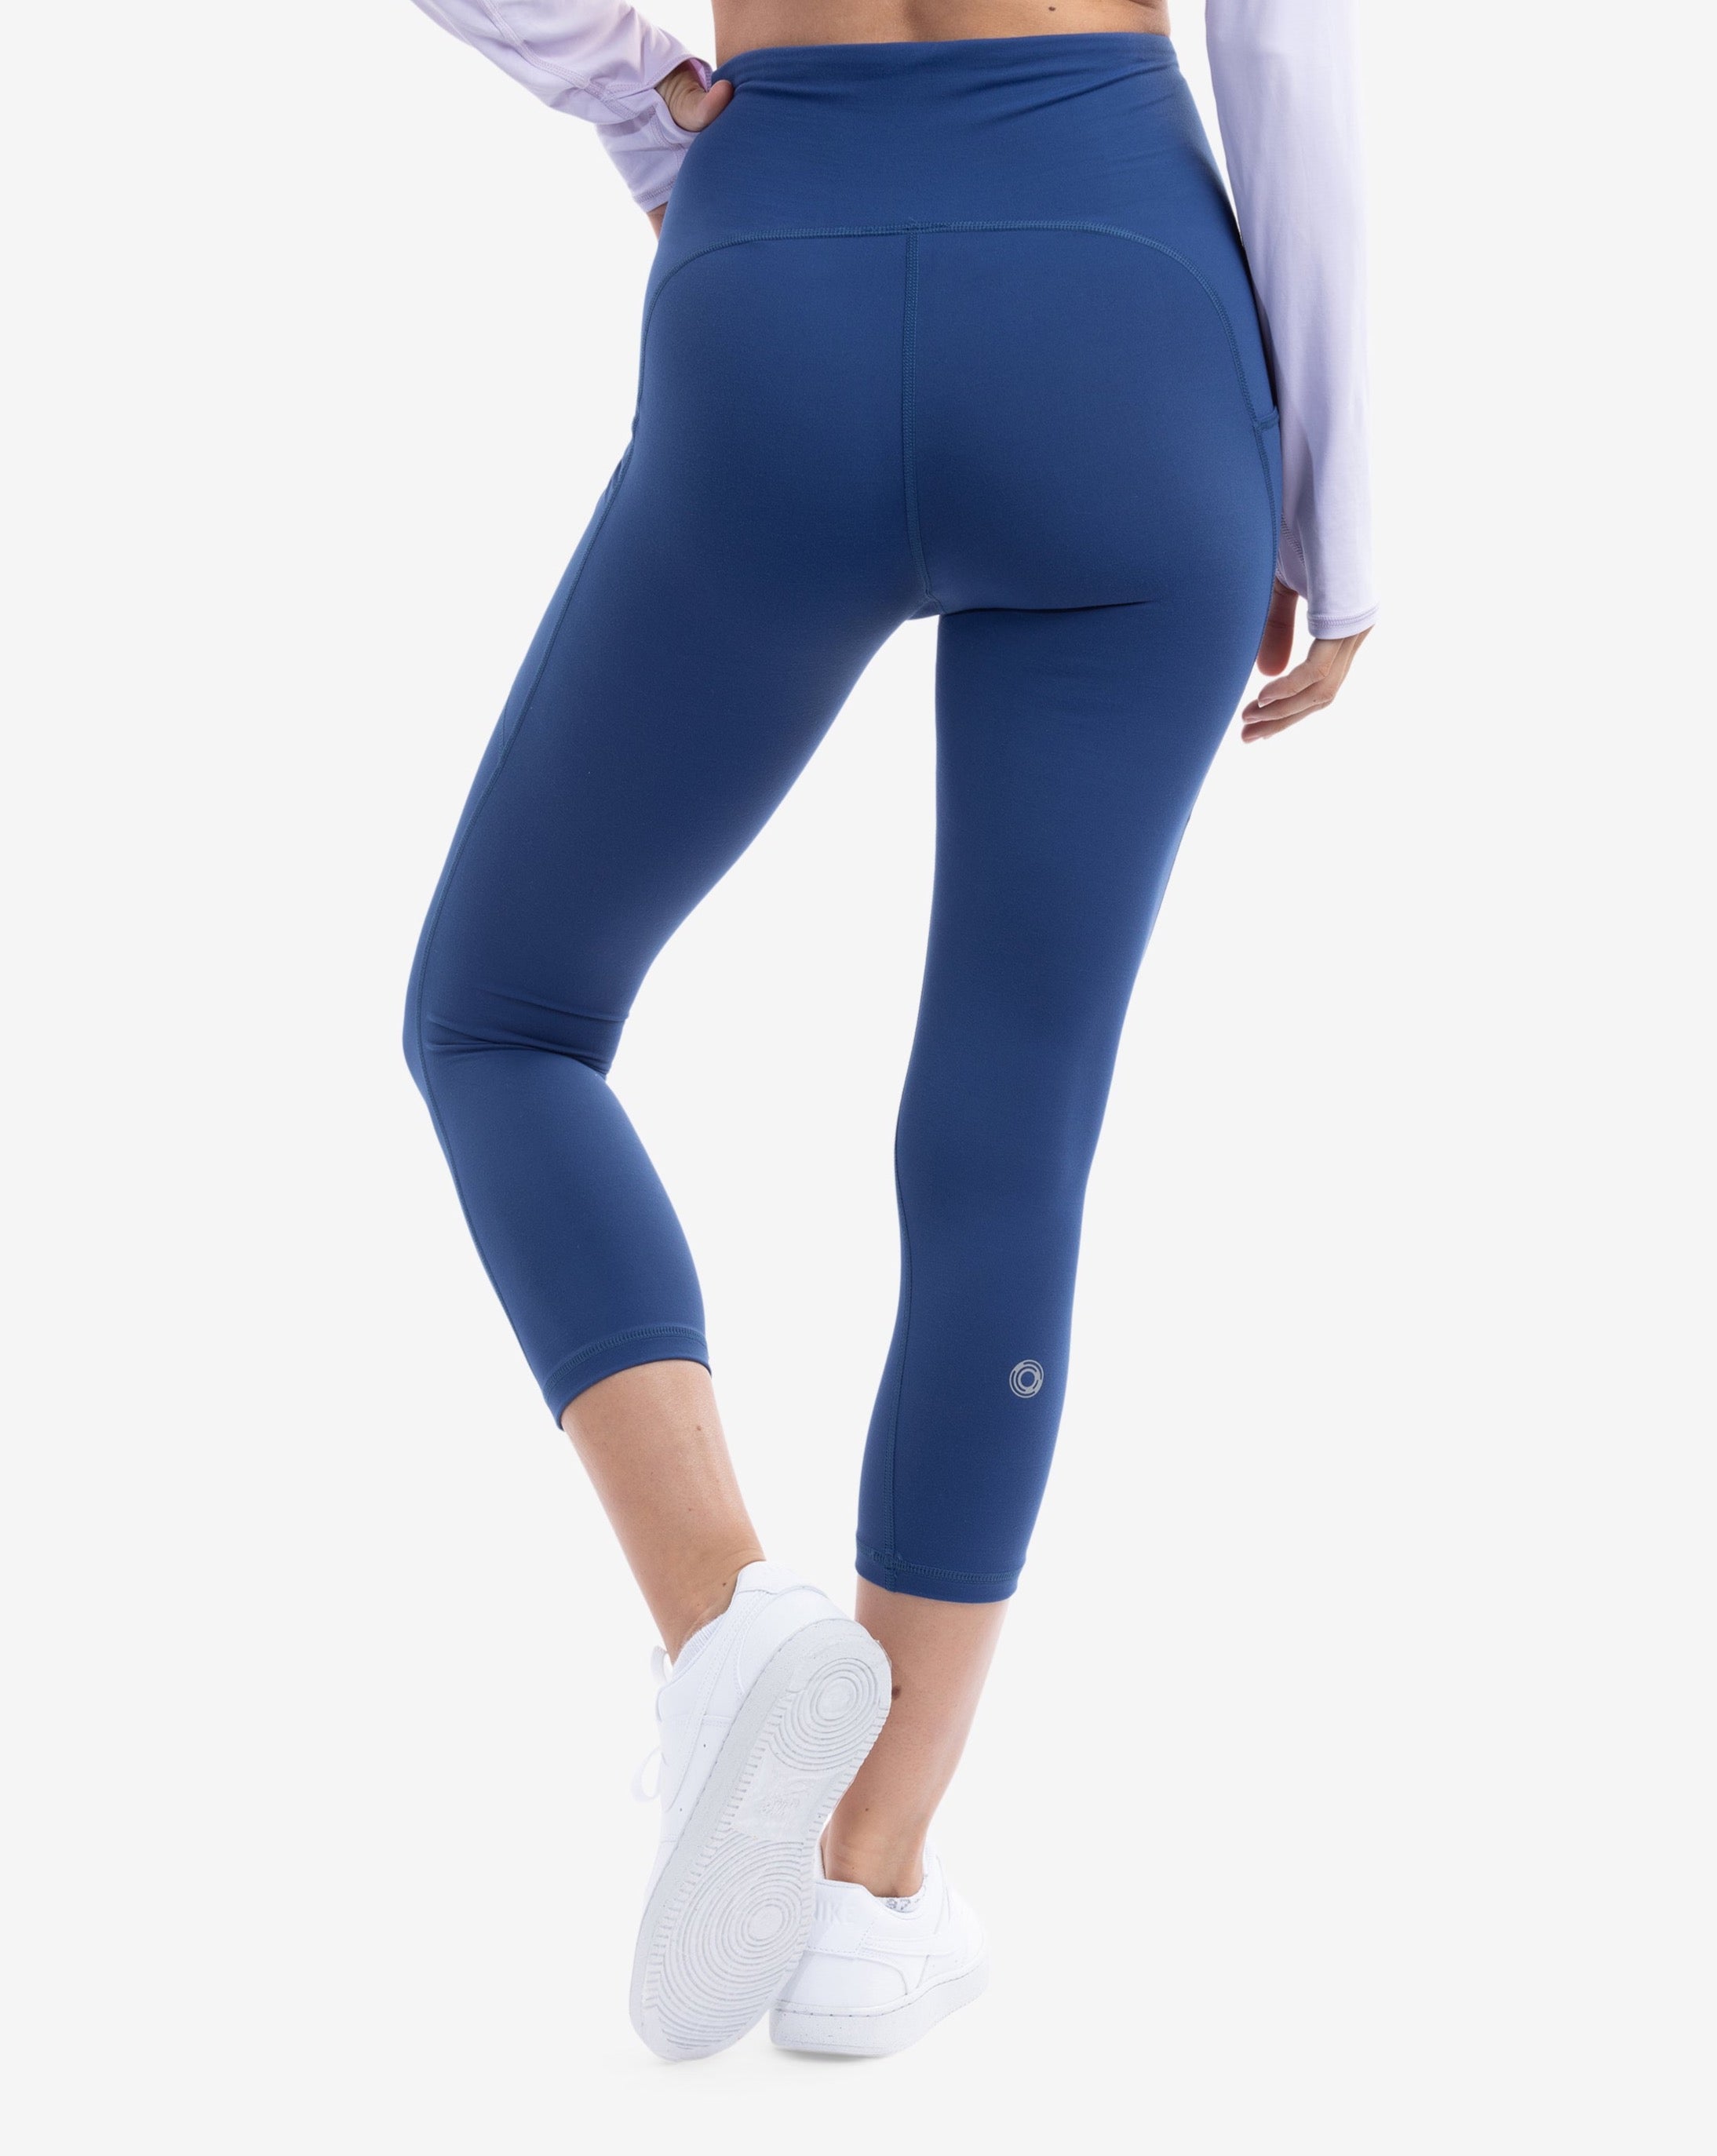 Women's Active Compression Capri Leggings (Royal Blue, Small/Medium) 